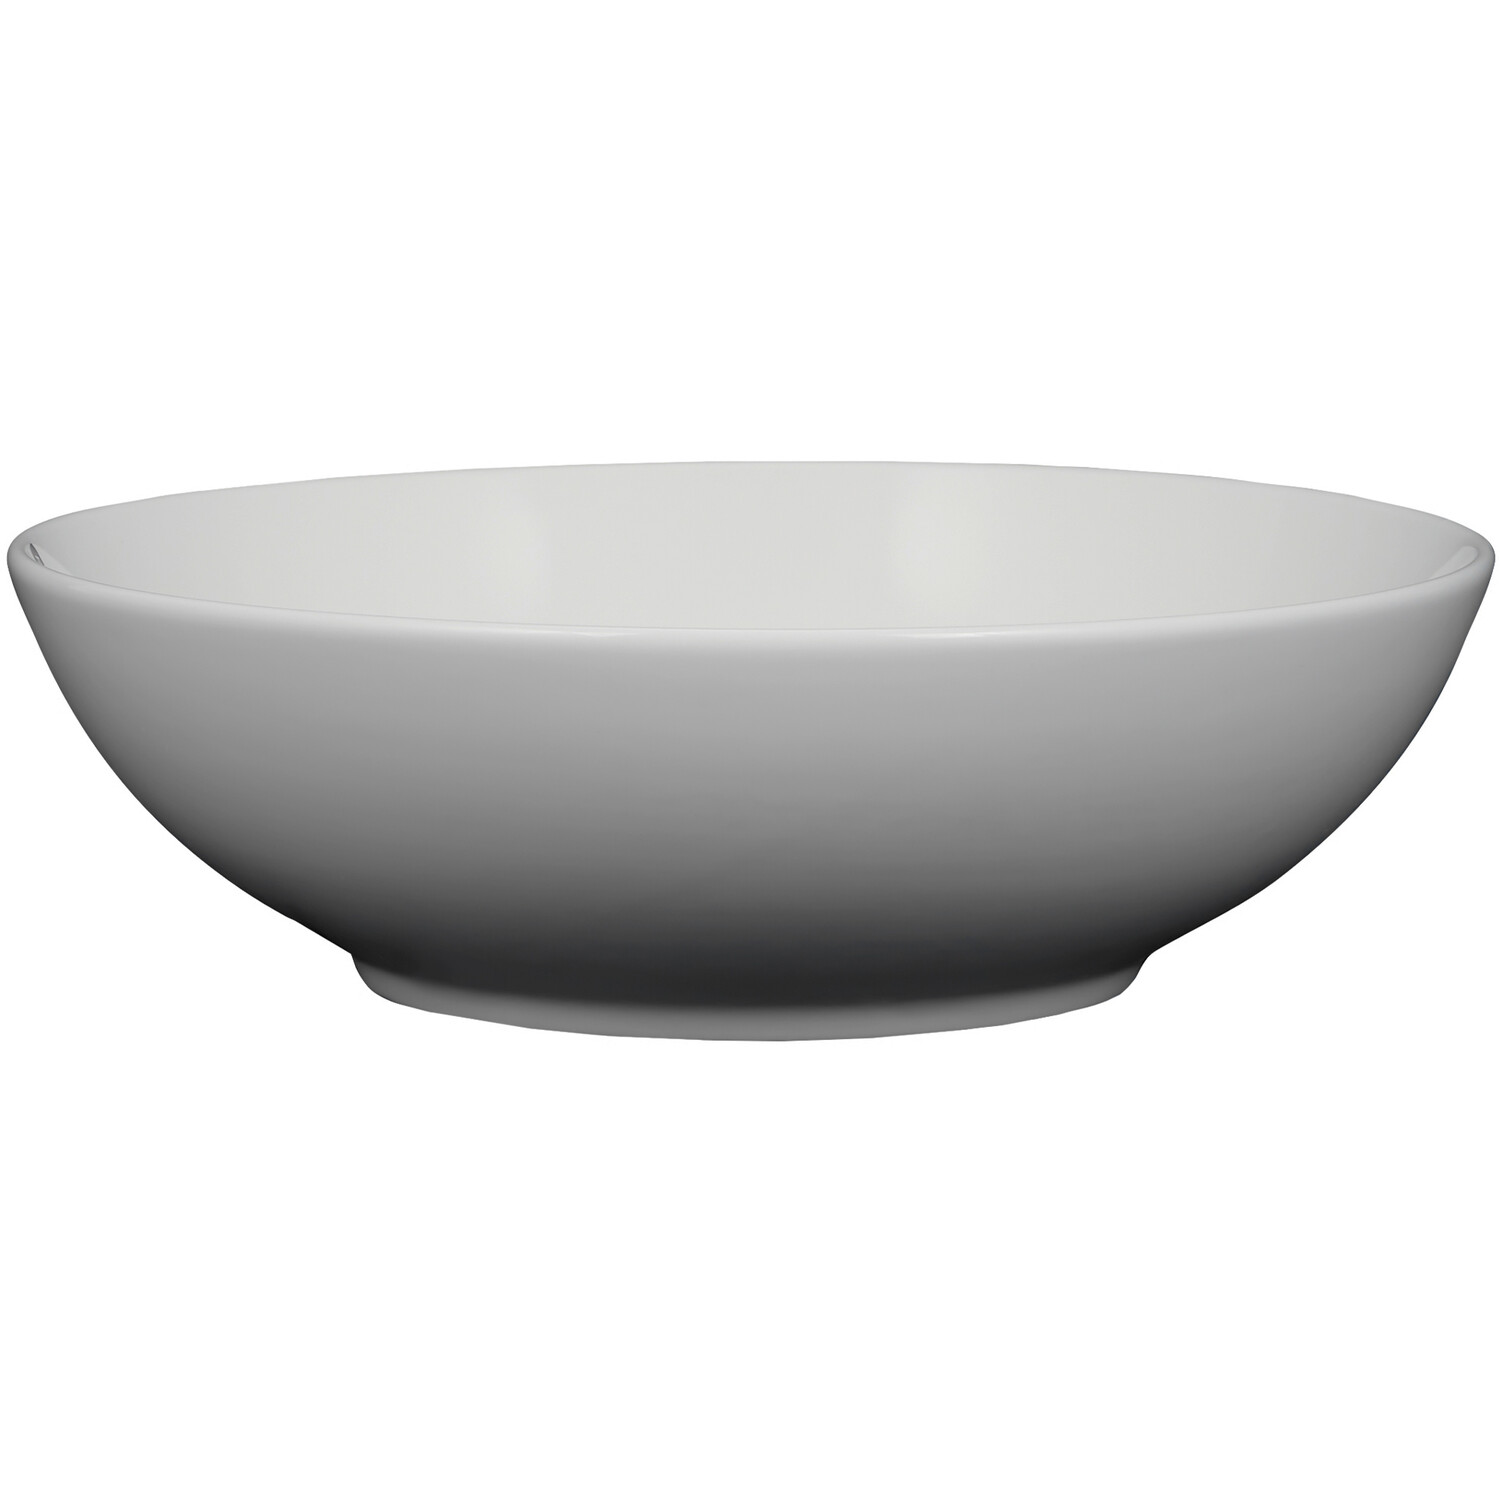 Regency Porcelain Large Bowl - White Image 1